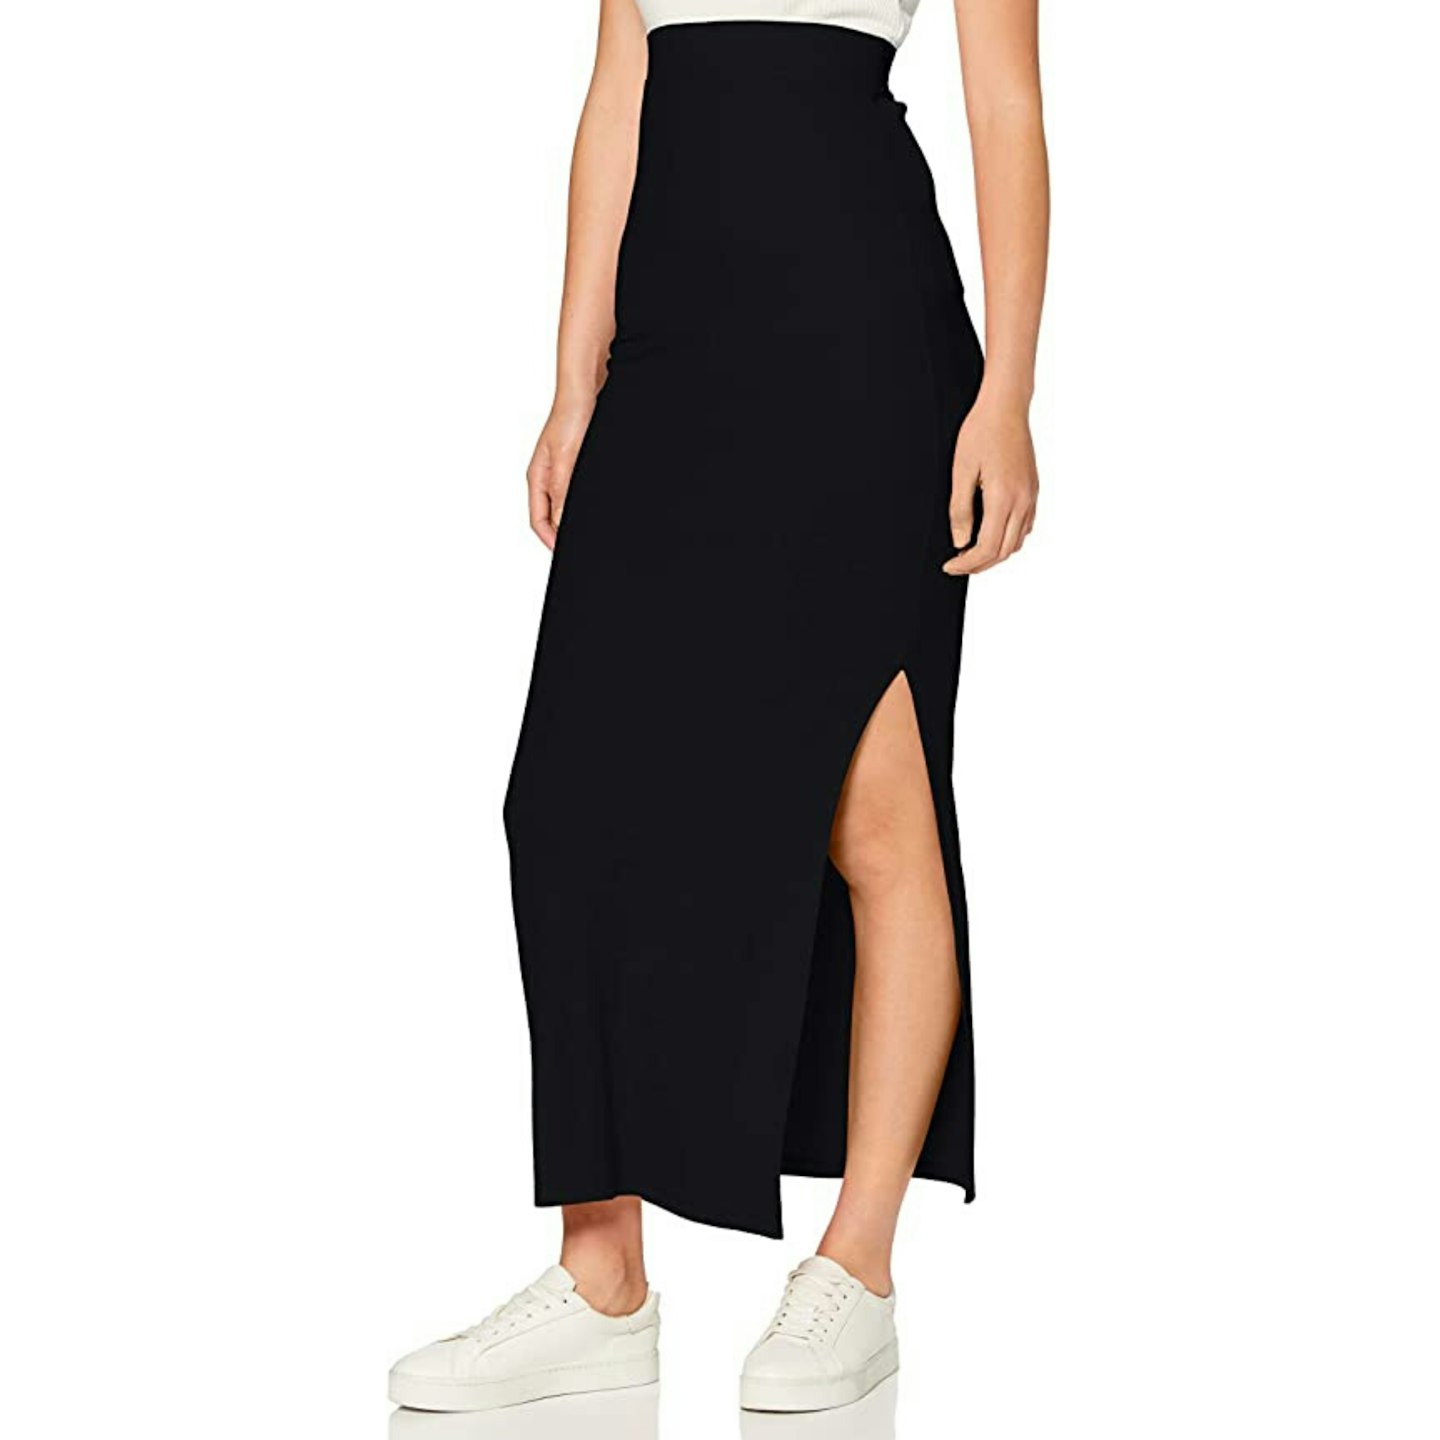 Amazon Brand - MERAKI Women's Lightweight Rib Maxi Skirt